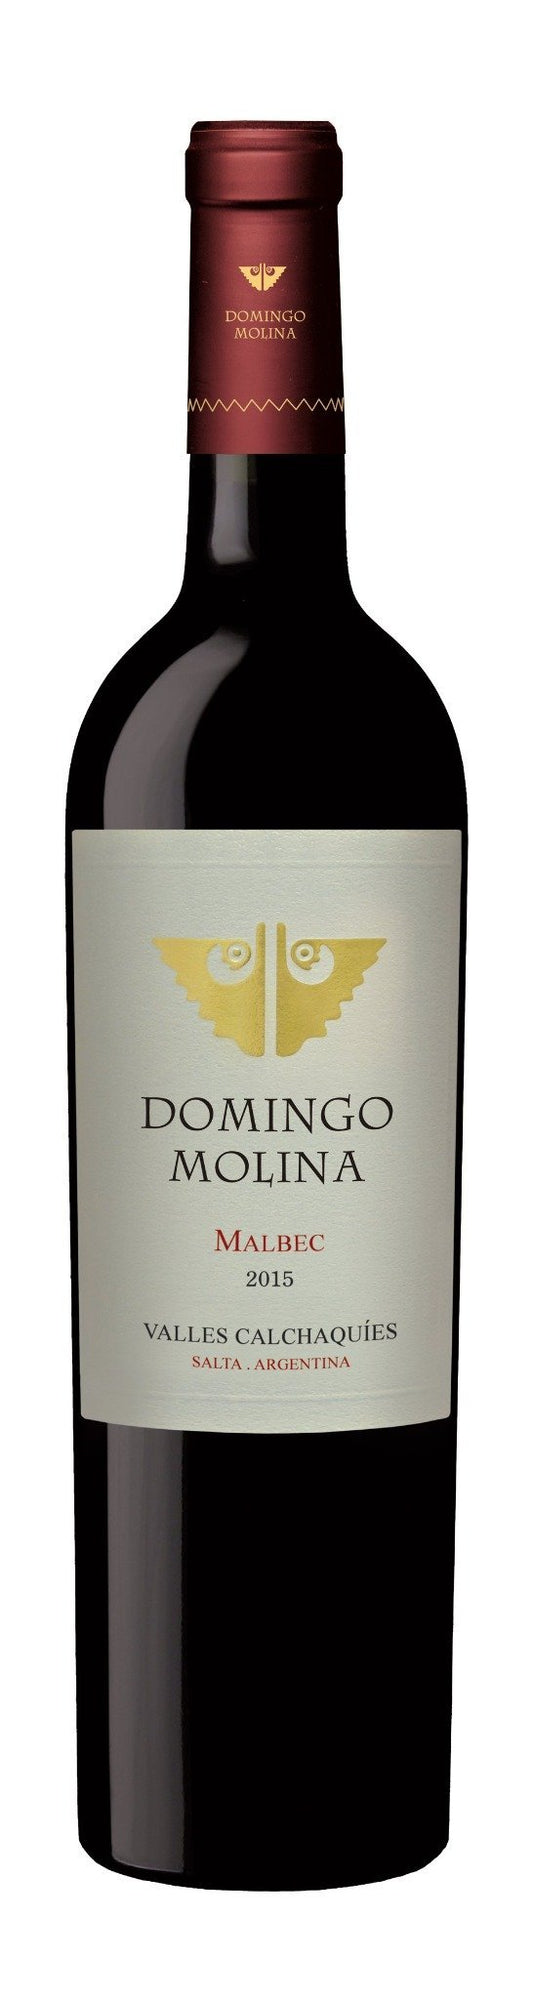 Domingo Molina  Malbec - Mi-bodeguita.com